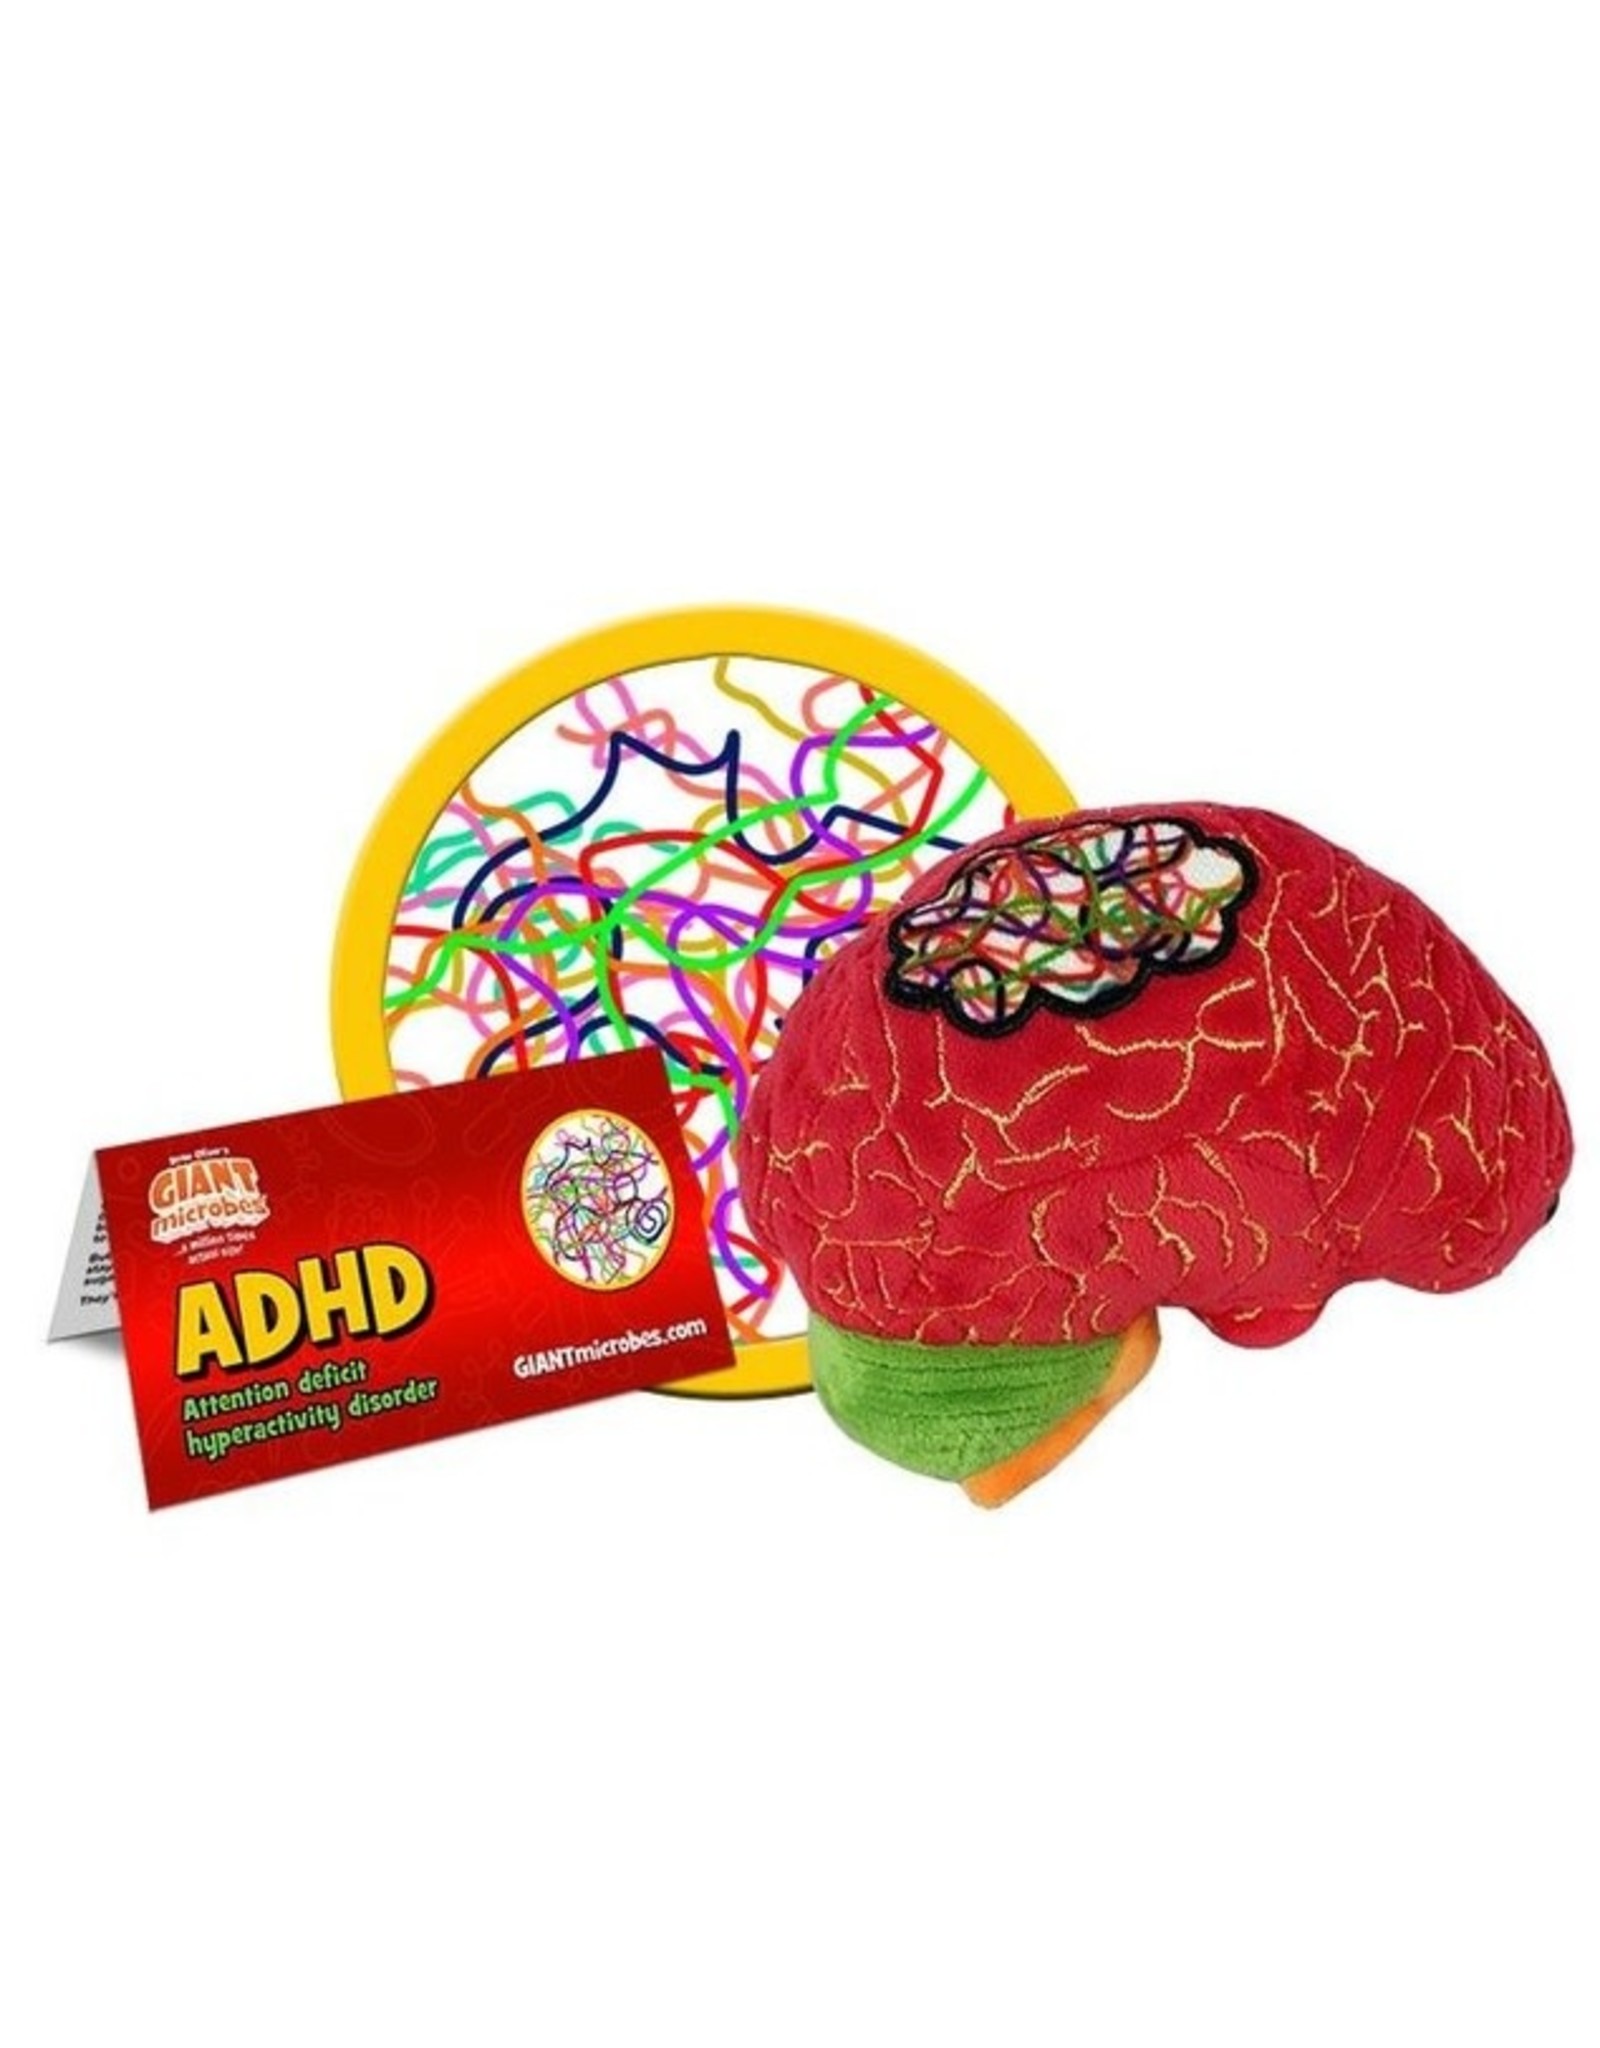 GIANTmicrobes ADHD